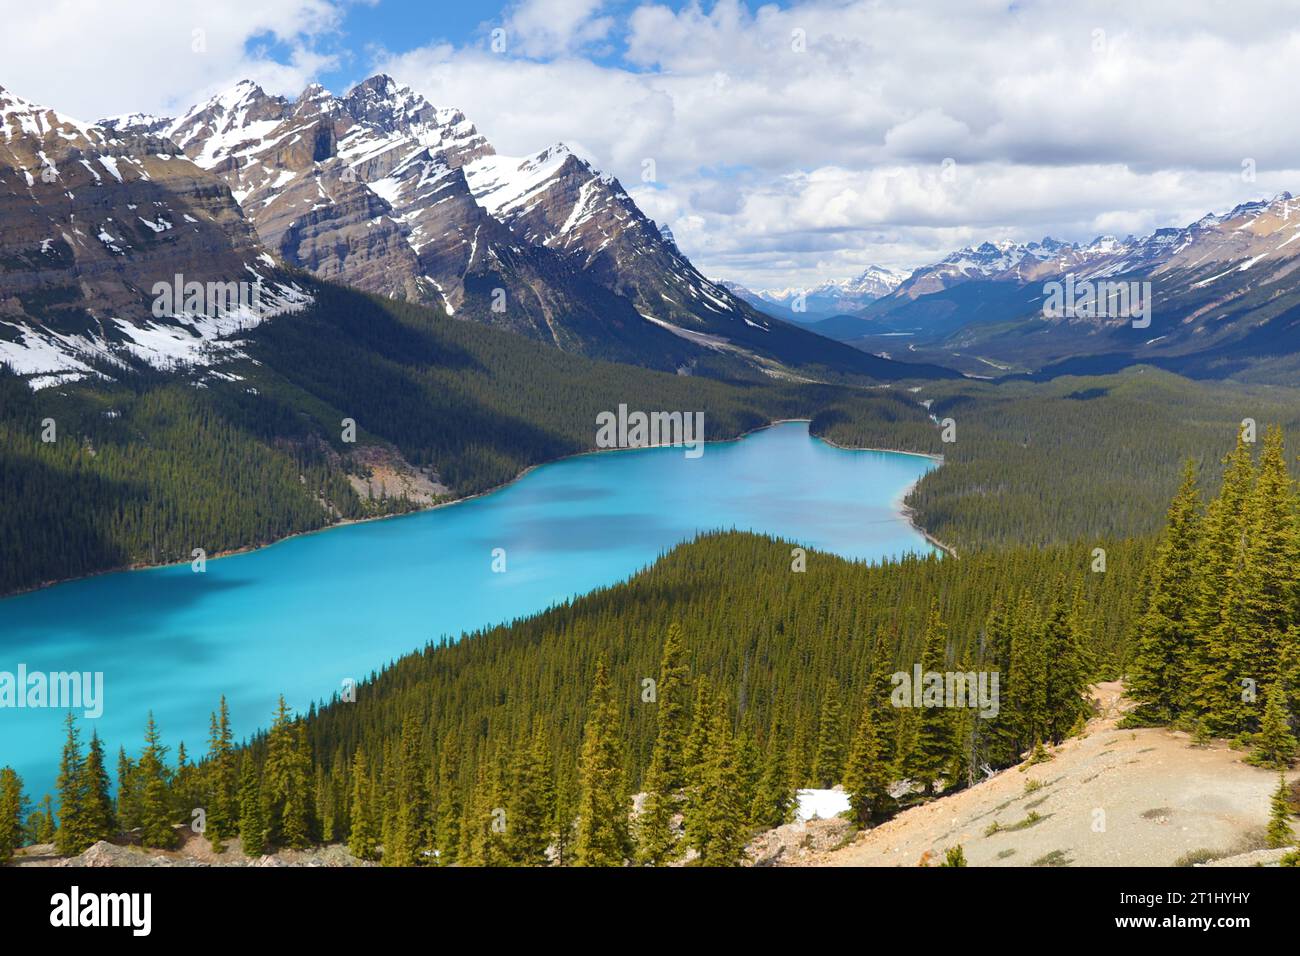 Der türkisfarbene Lake Peyto im Banff National Park, Kanada. Mountain Lake als „Fuchskopf“ ist bei Touristen beliebt. Stockfoto